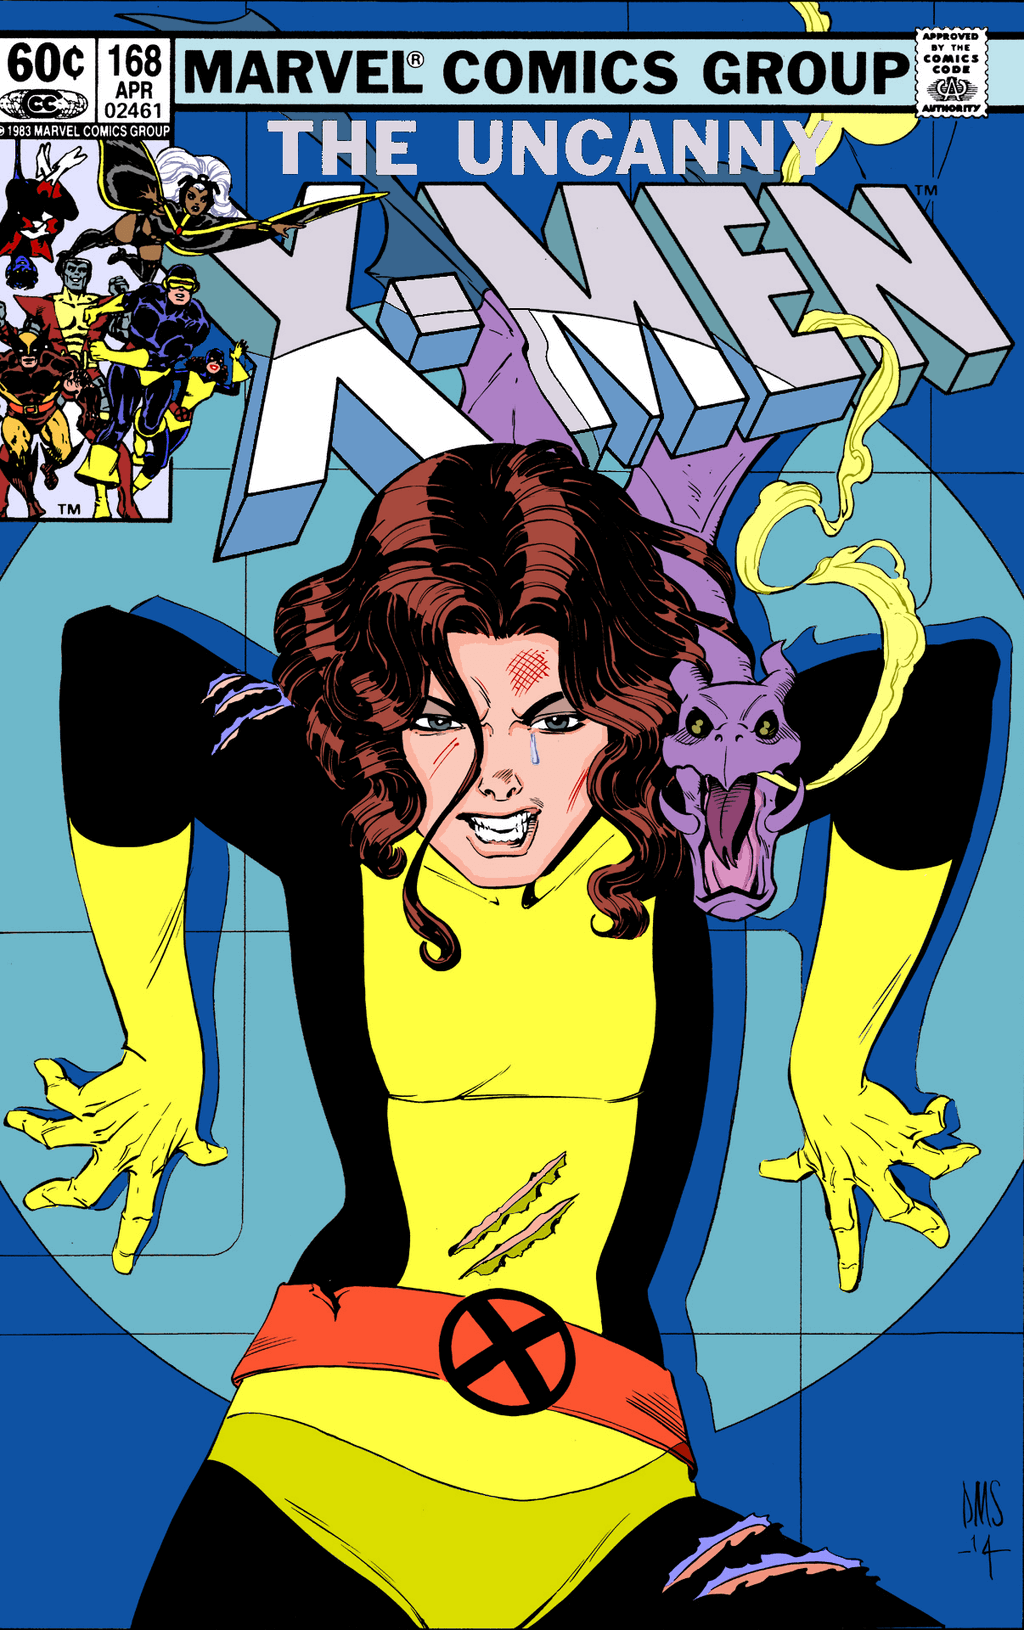 X-Men Kitty Pryde